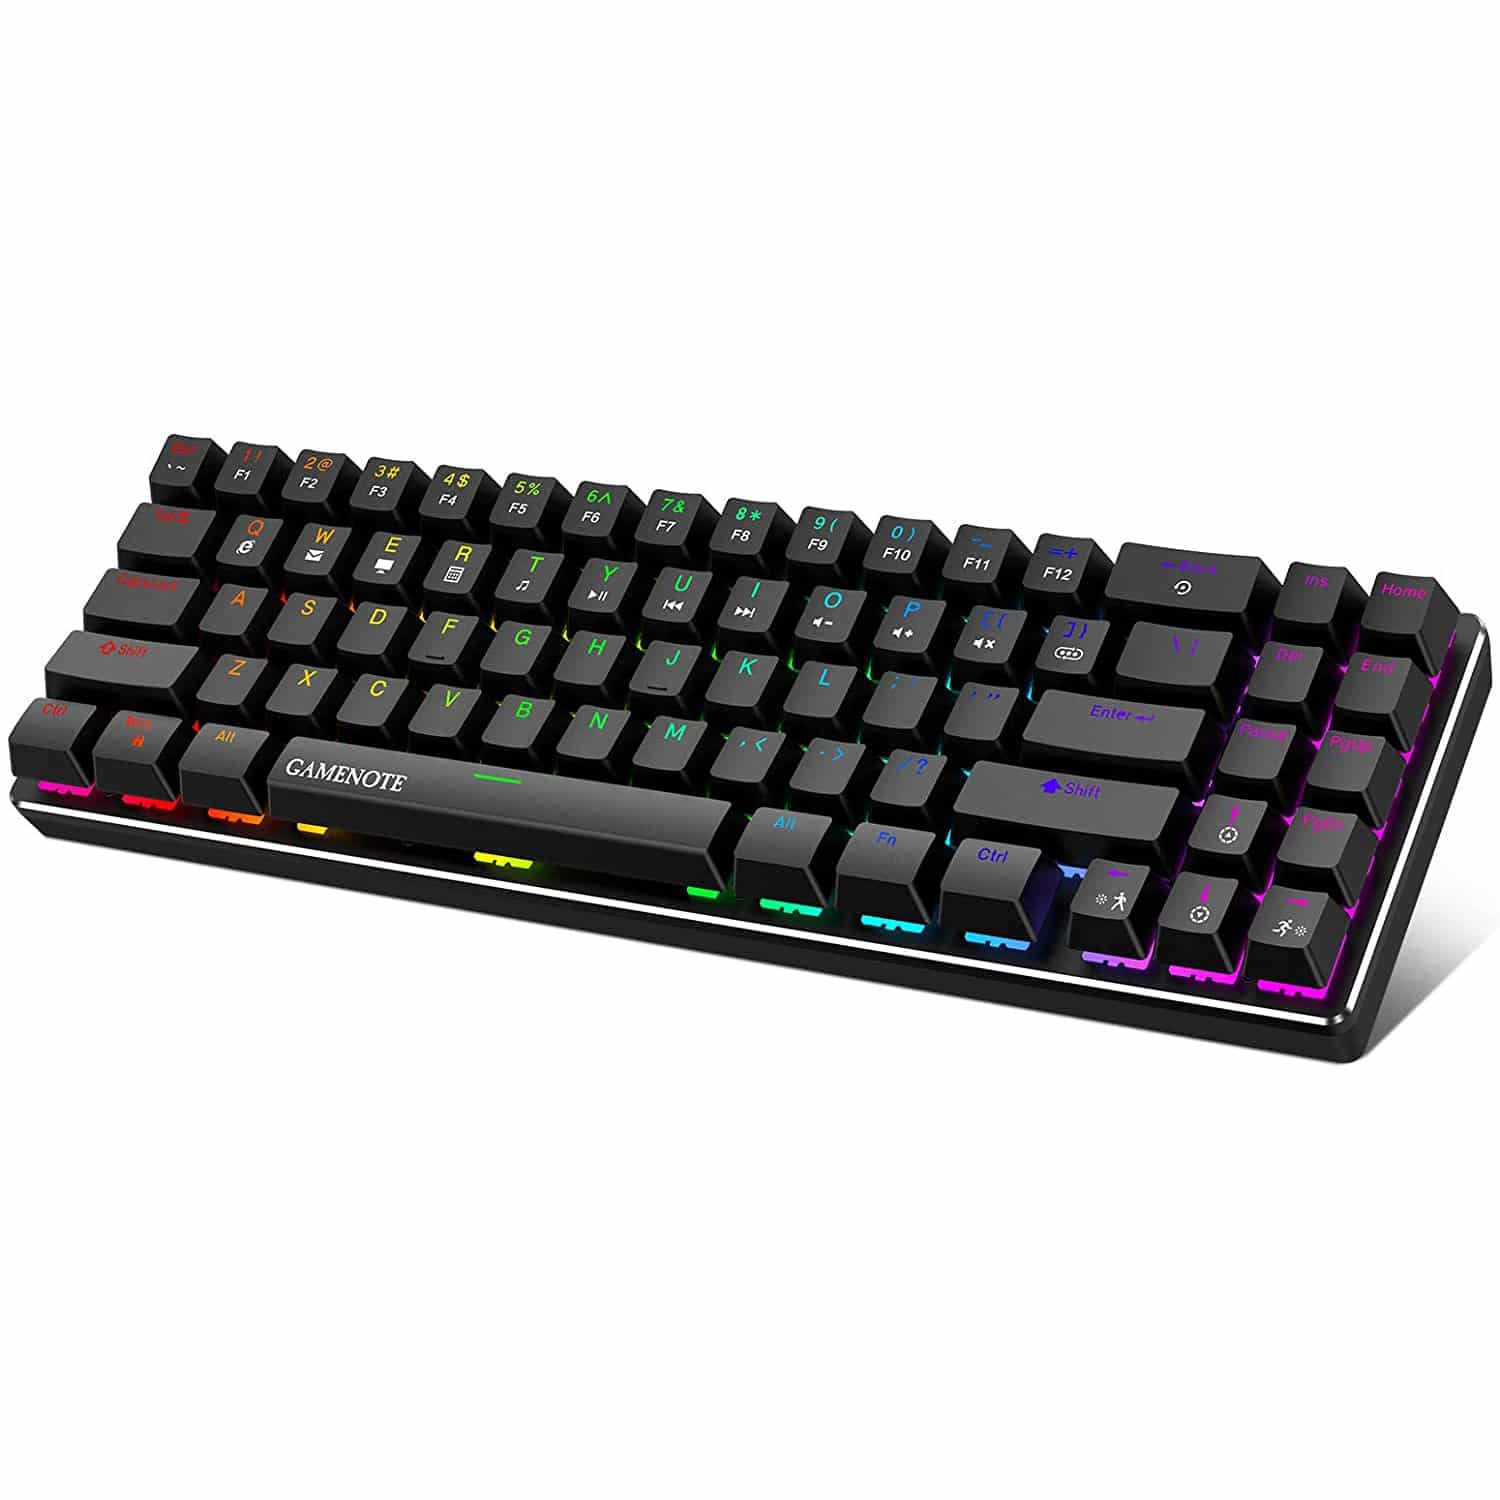 HAVIT KB512L 60% Gaming Mechanical Keyboard with 71-Key, LED Backlit, Detachable USB Type-C Cable